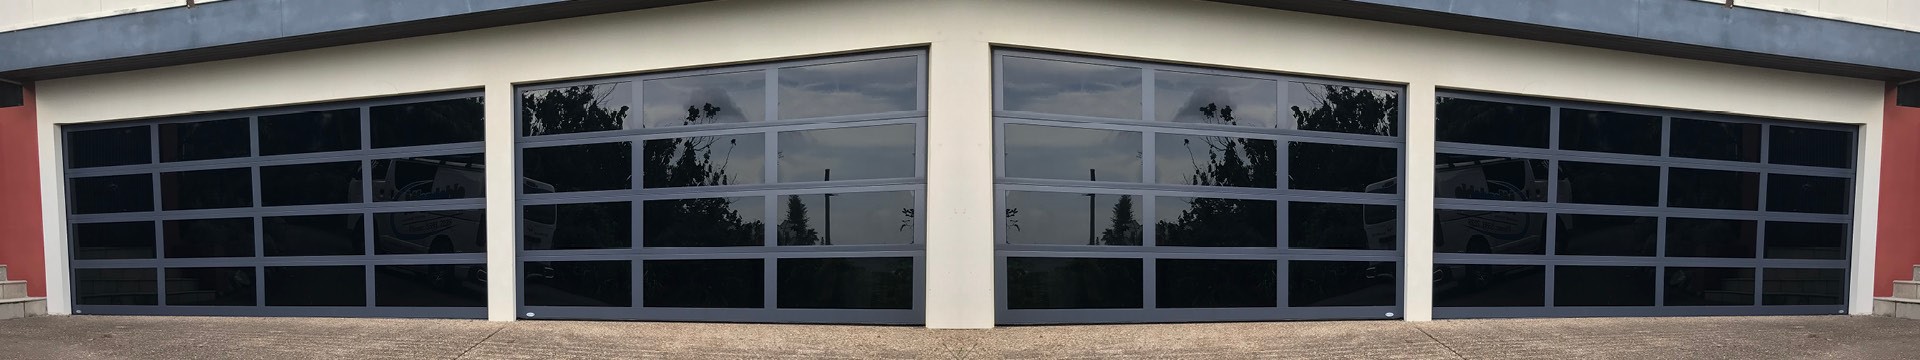 affordable-gold-coast-garage-doors-2.jpg